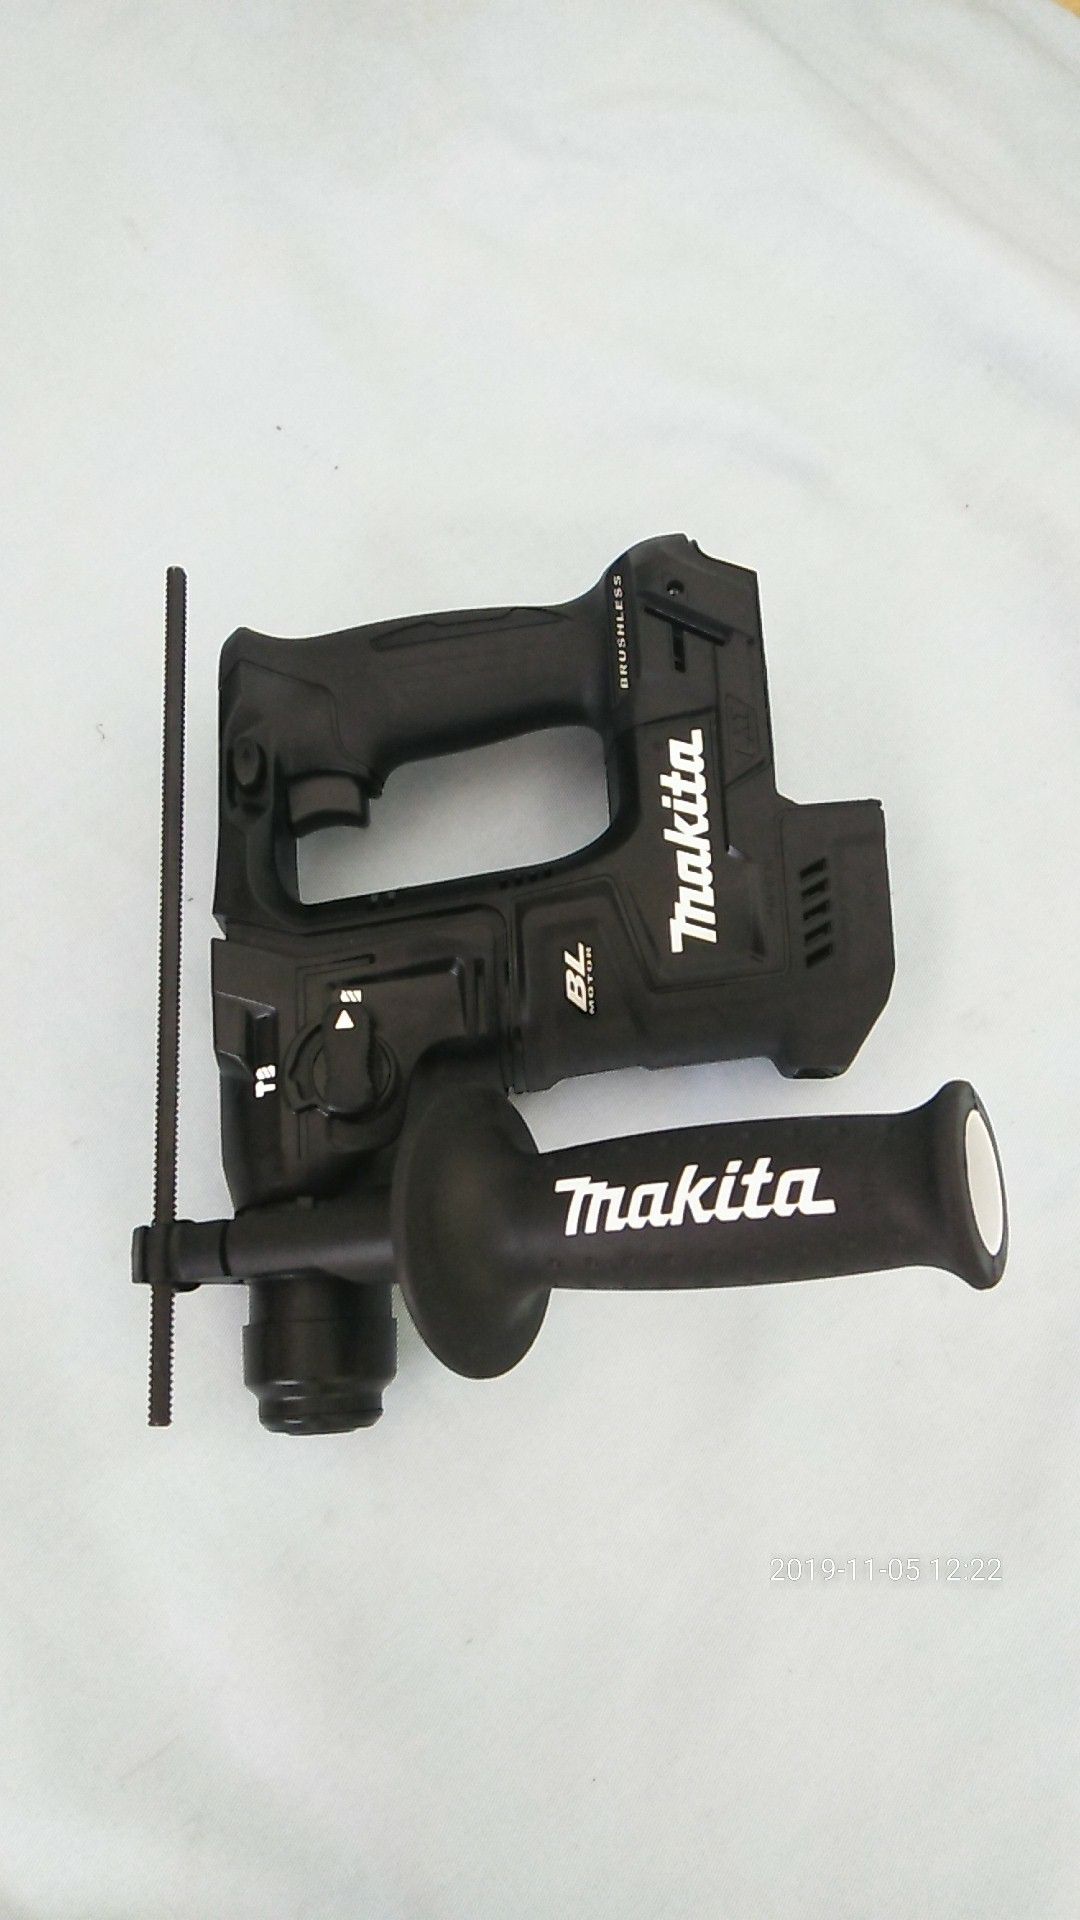 Makita nuevo tool only